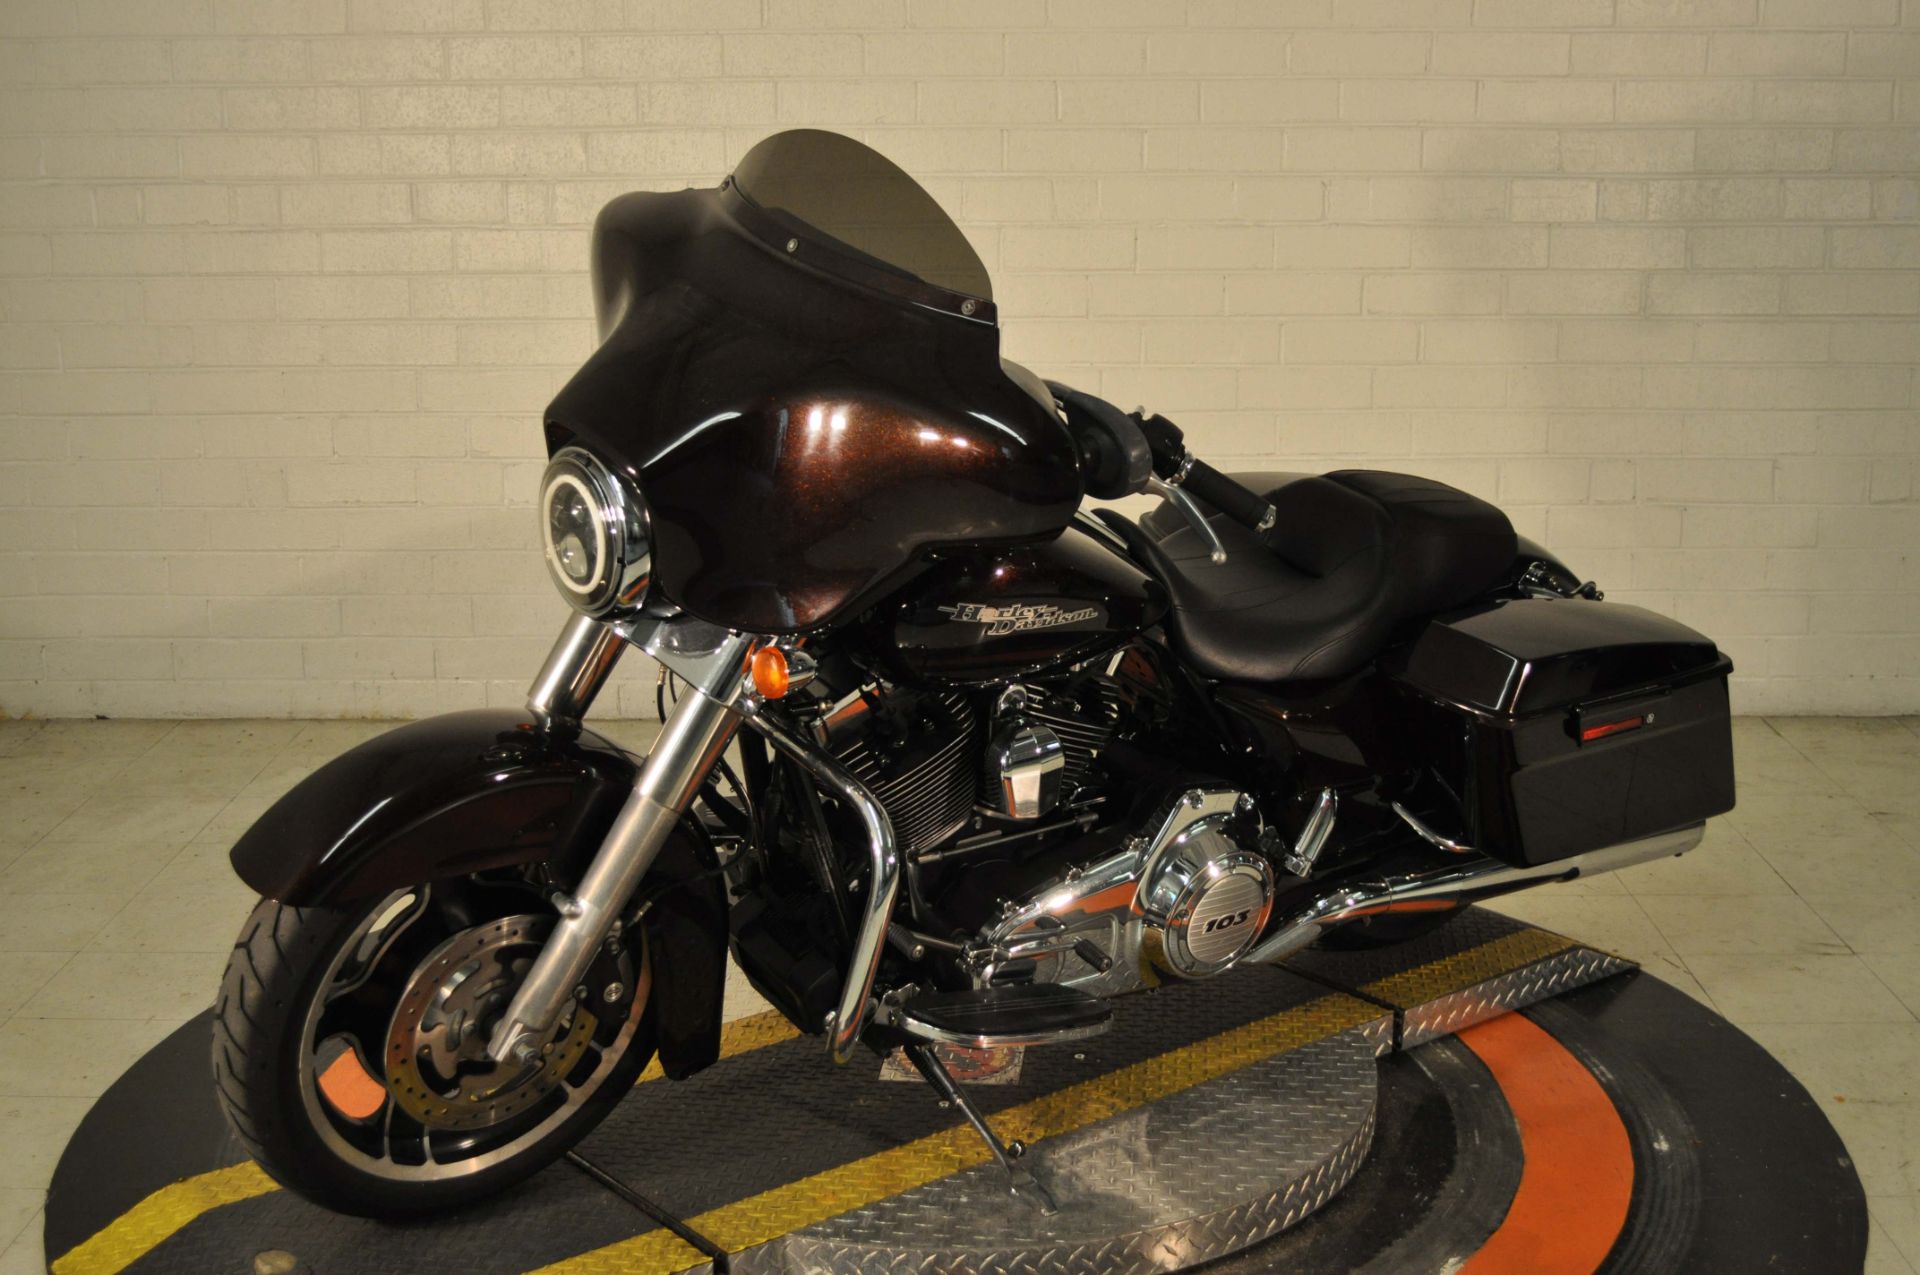 2011 Harley-Davidson Street Glide® in Winston Salem, North Carolina - Photo 6